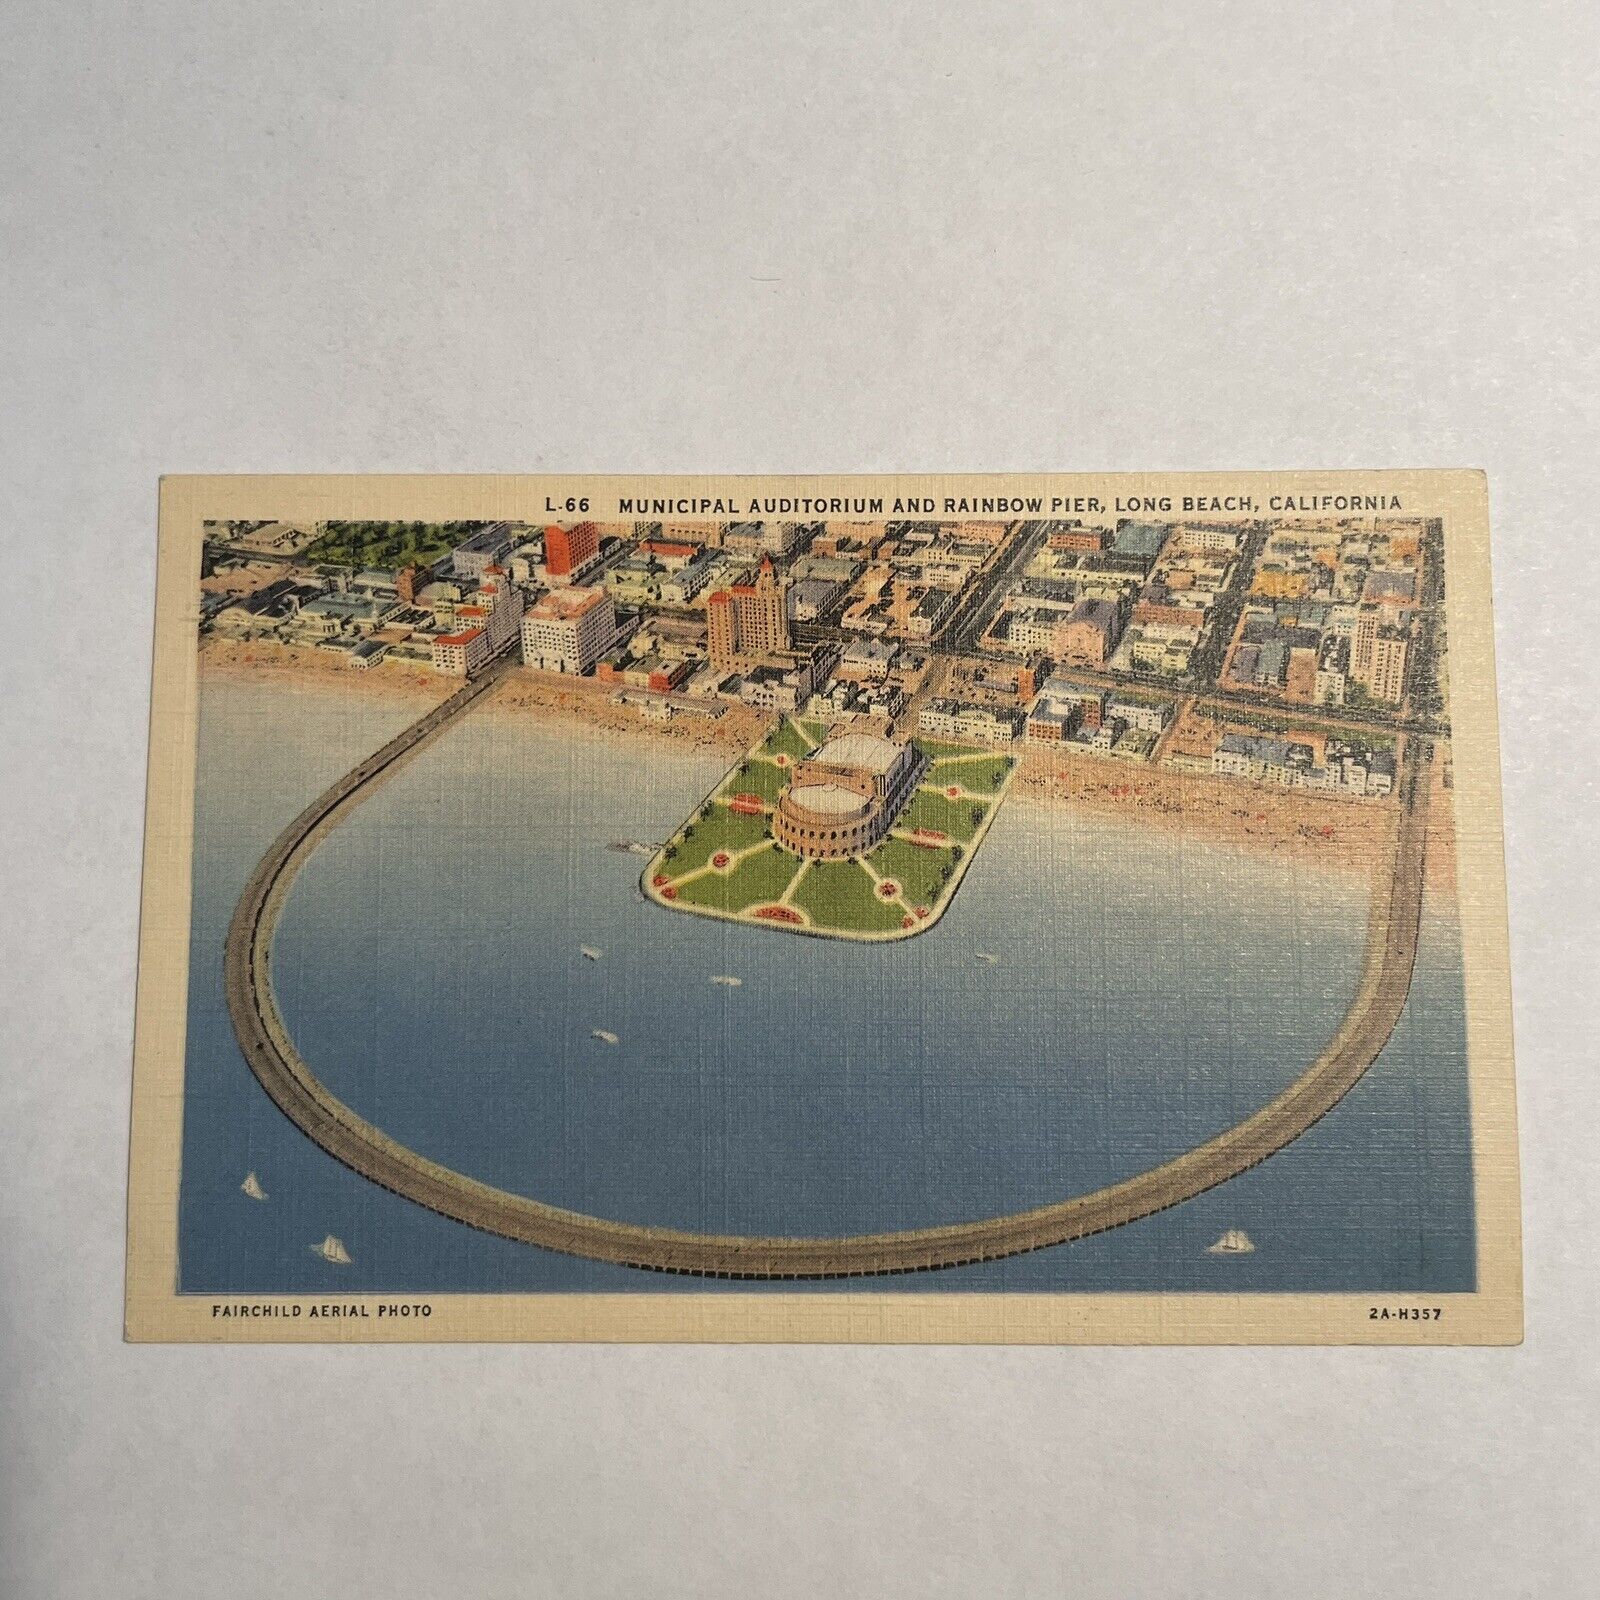 Postcard Showing Auditorium and Rainbow Pier Long Beach California Aerial